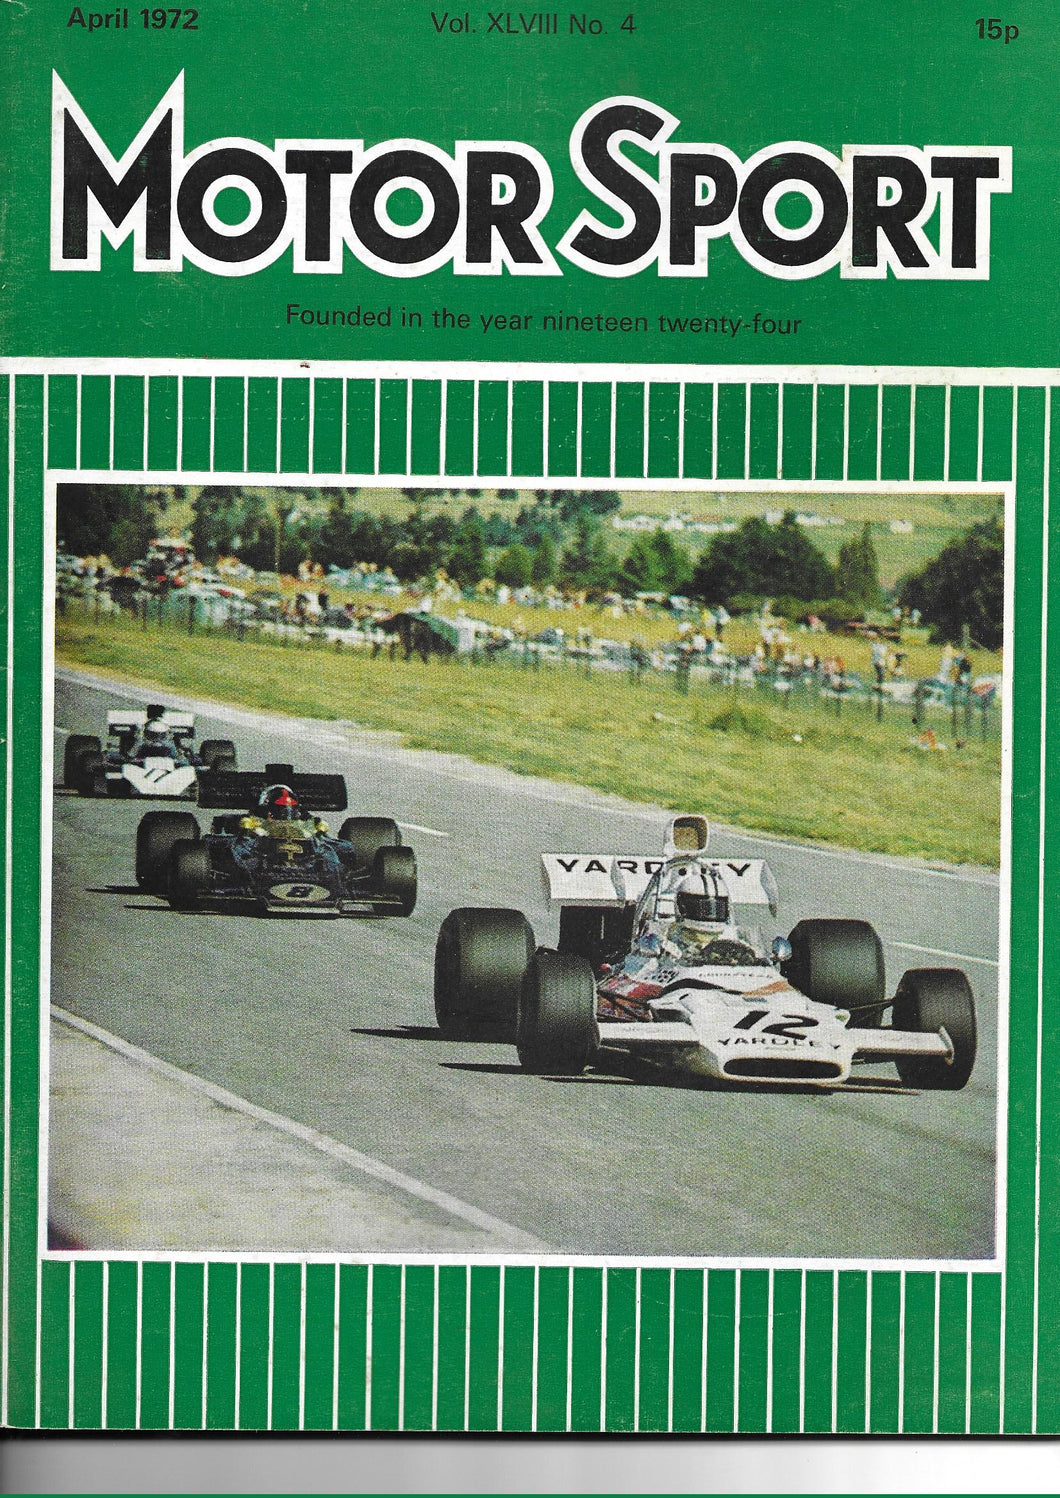 Motor Sport Magazine April 1972 Vol XLVIII No 4